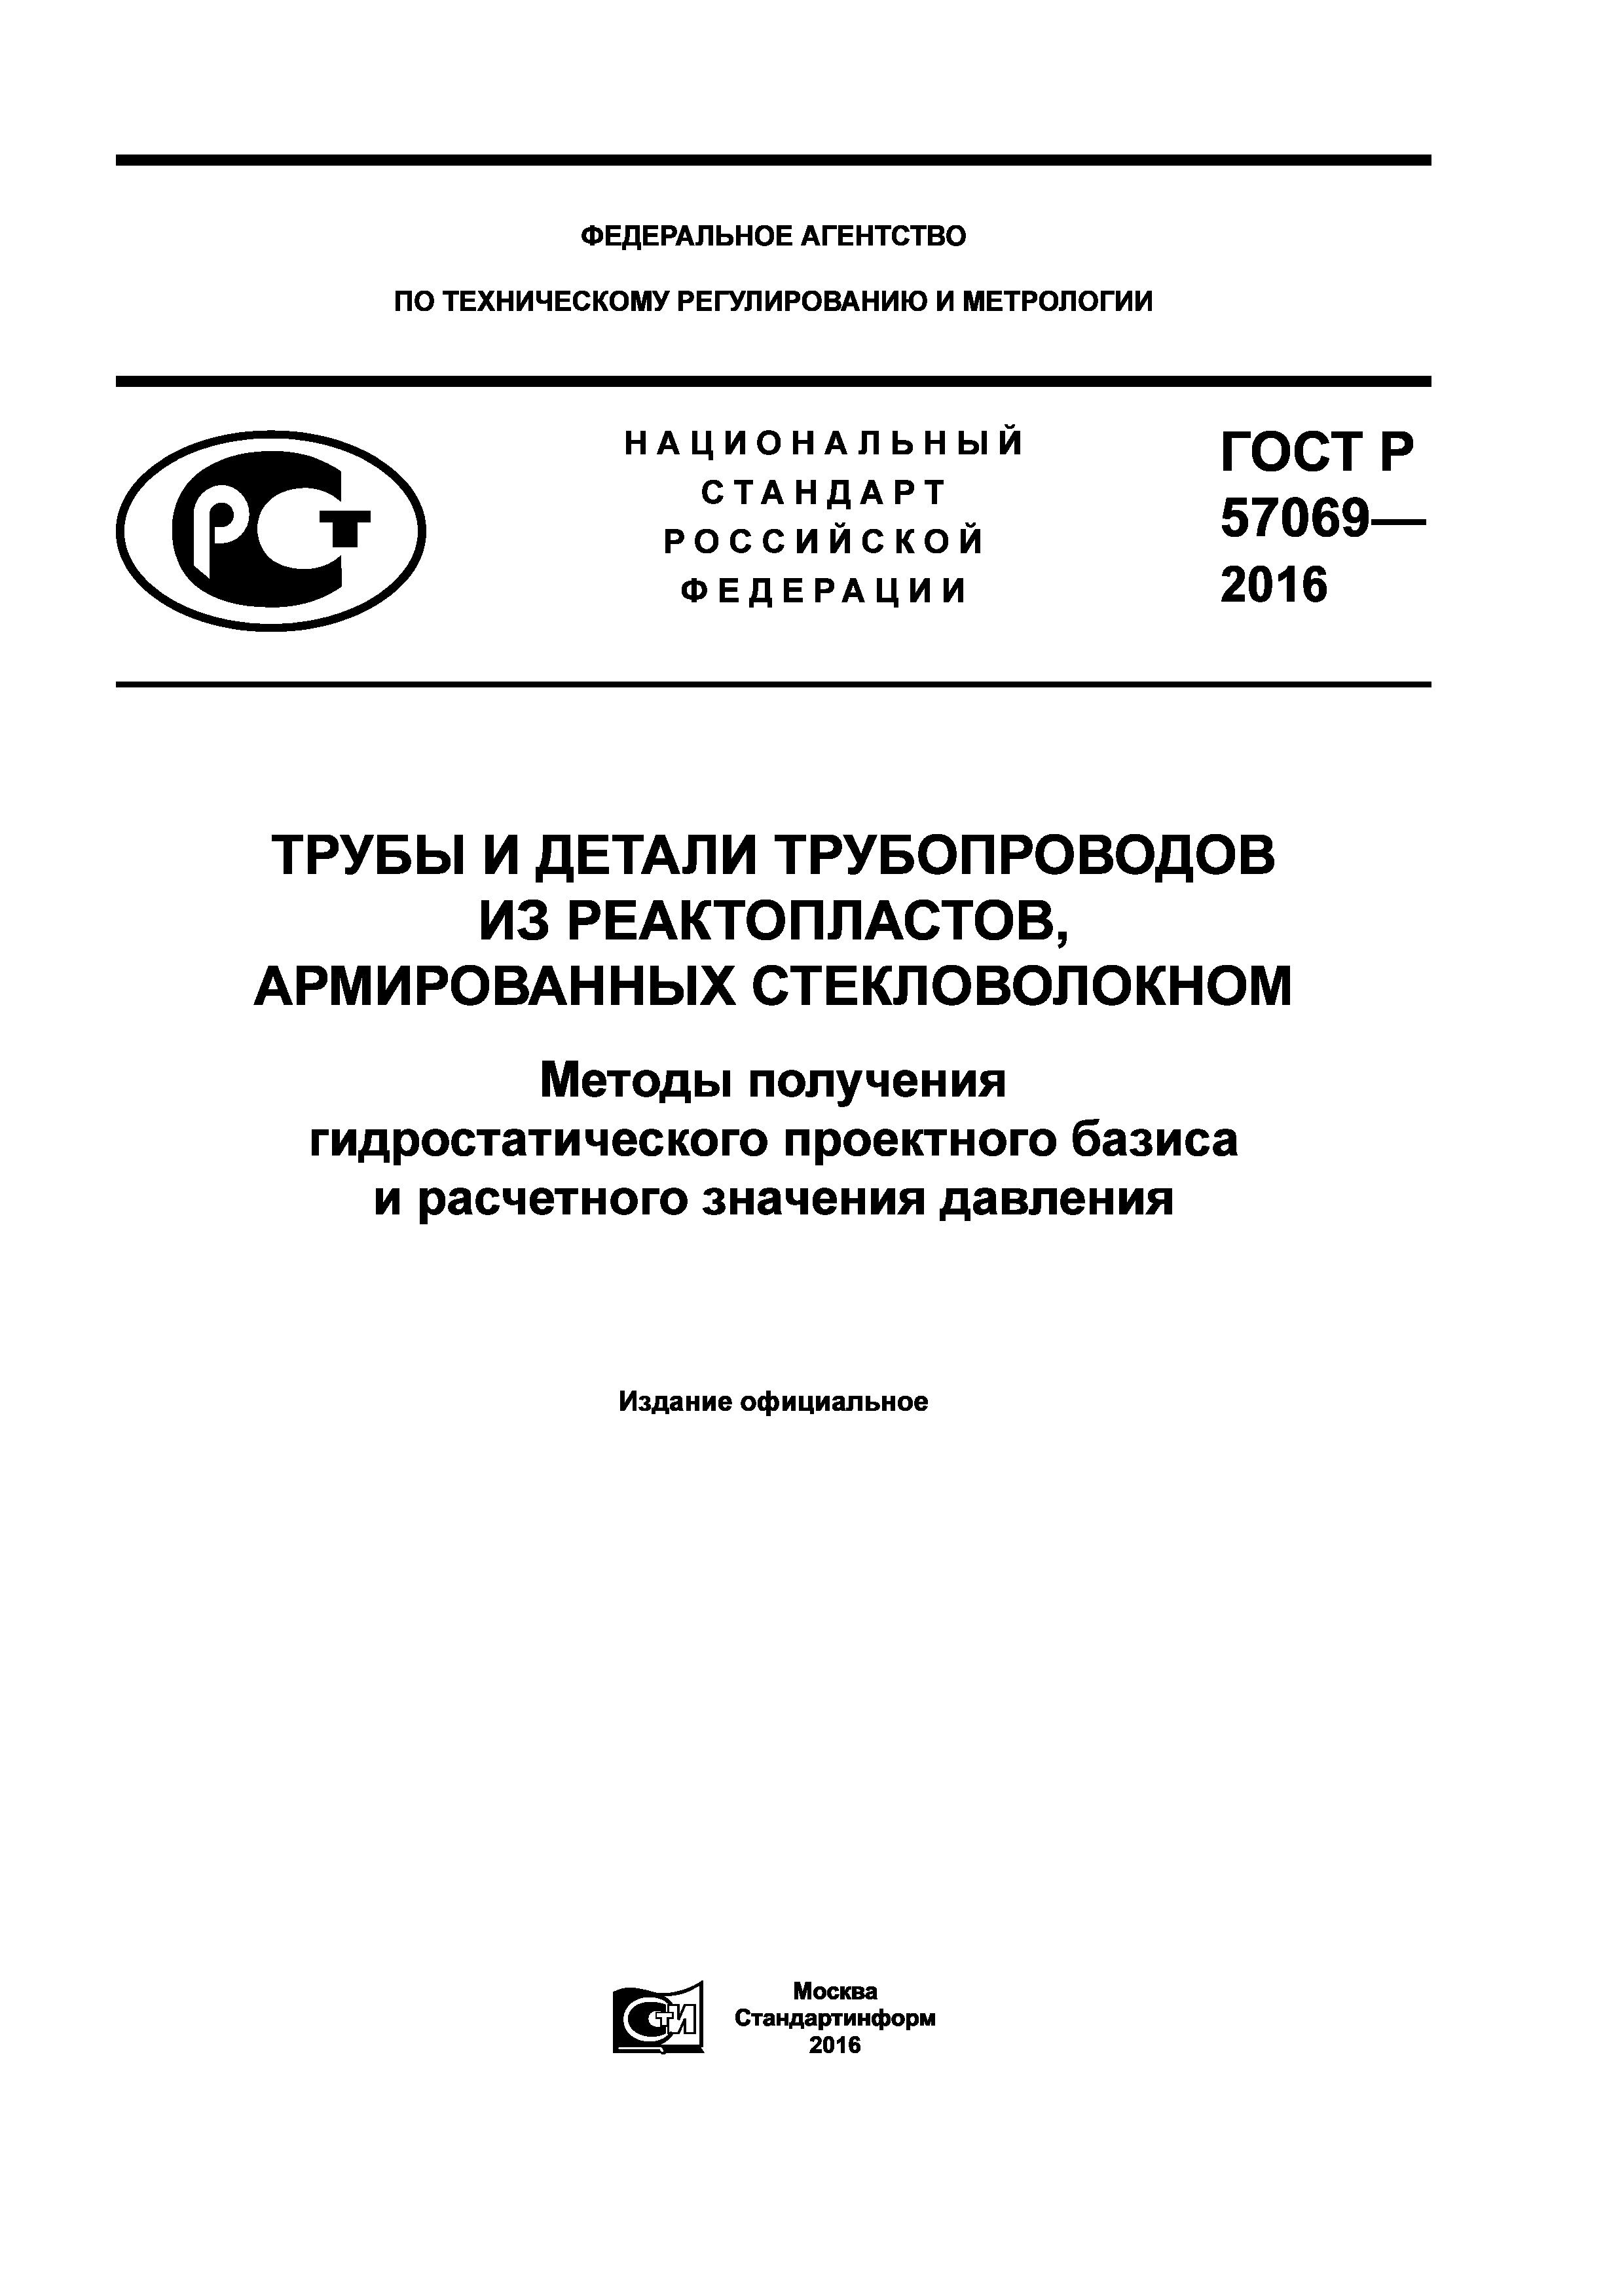 ГОСТ Р 57069-2016